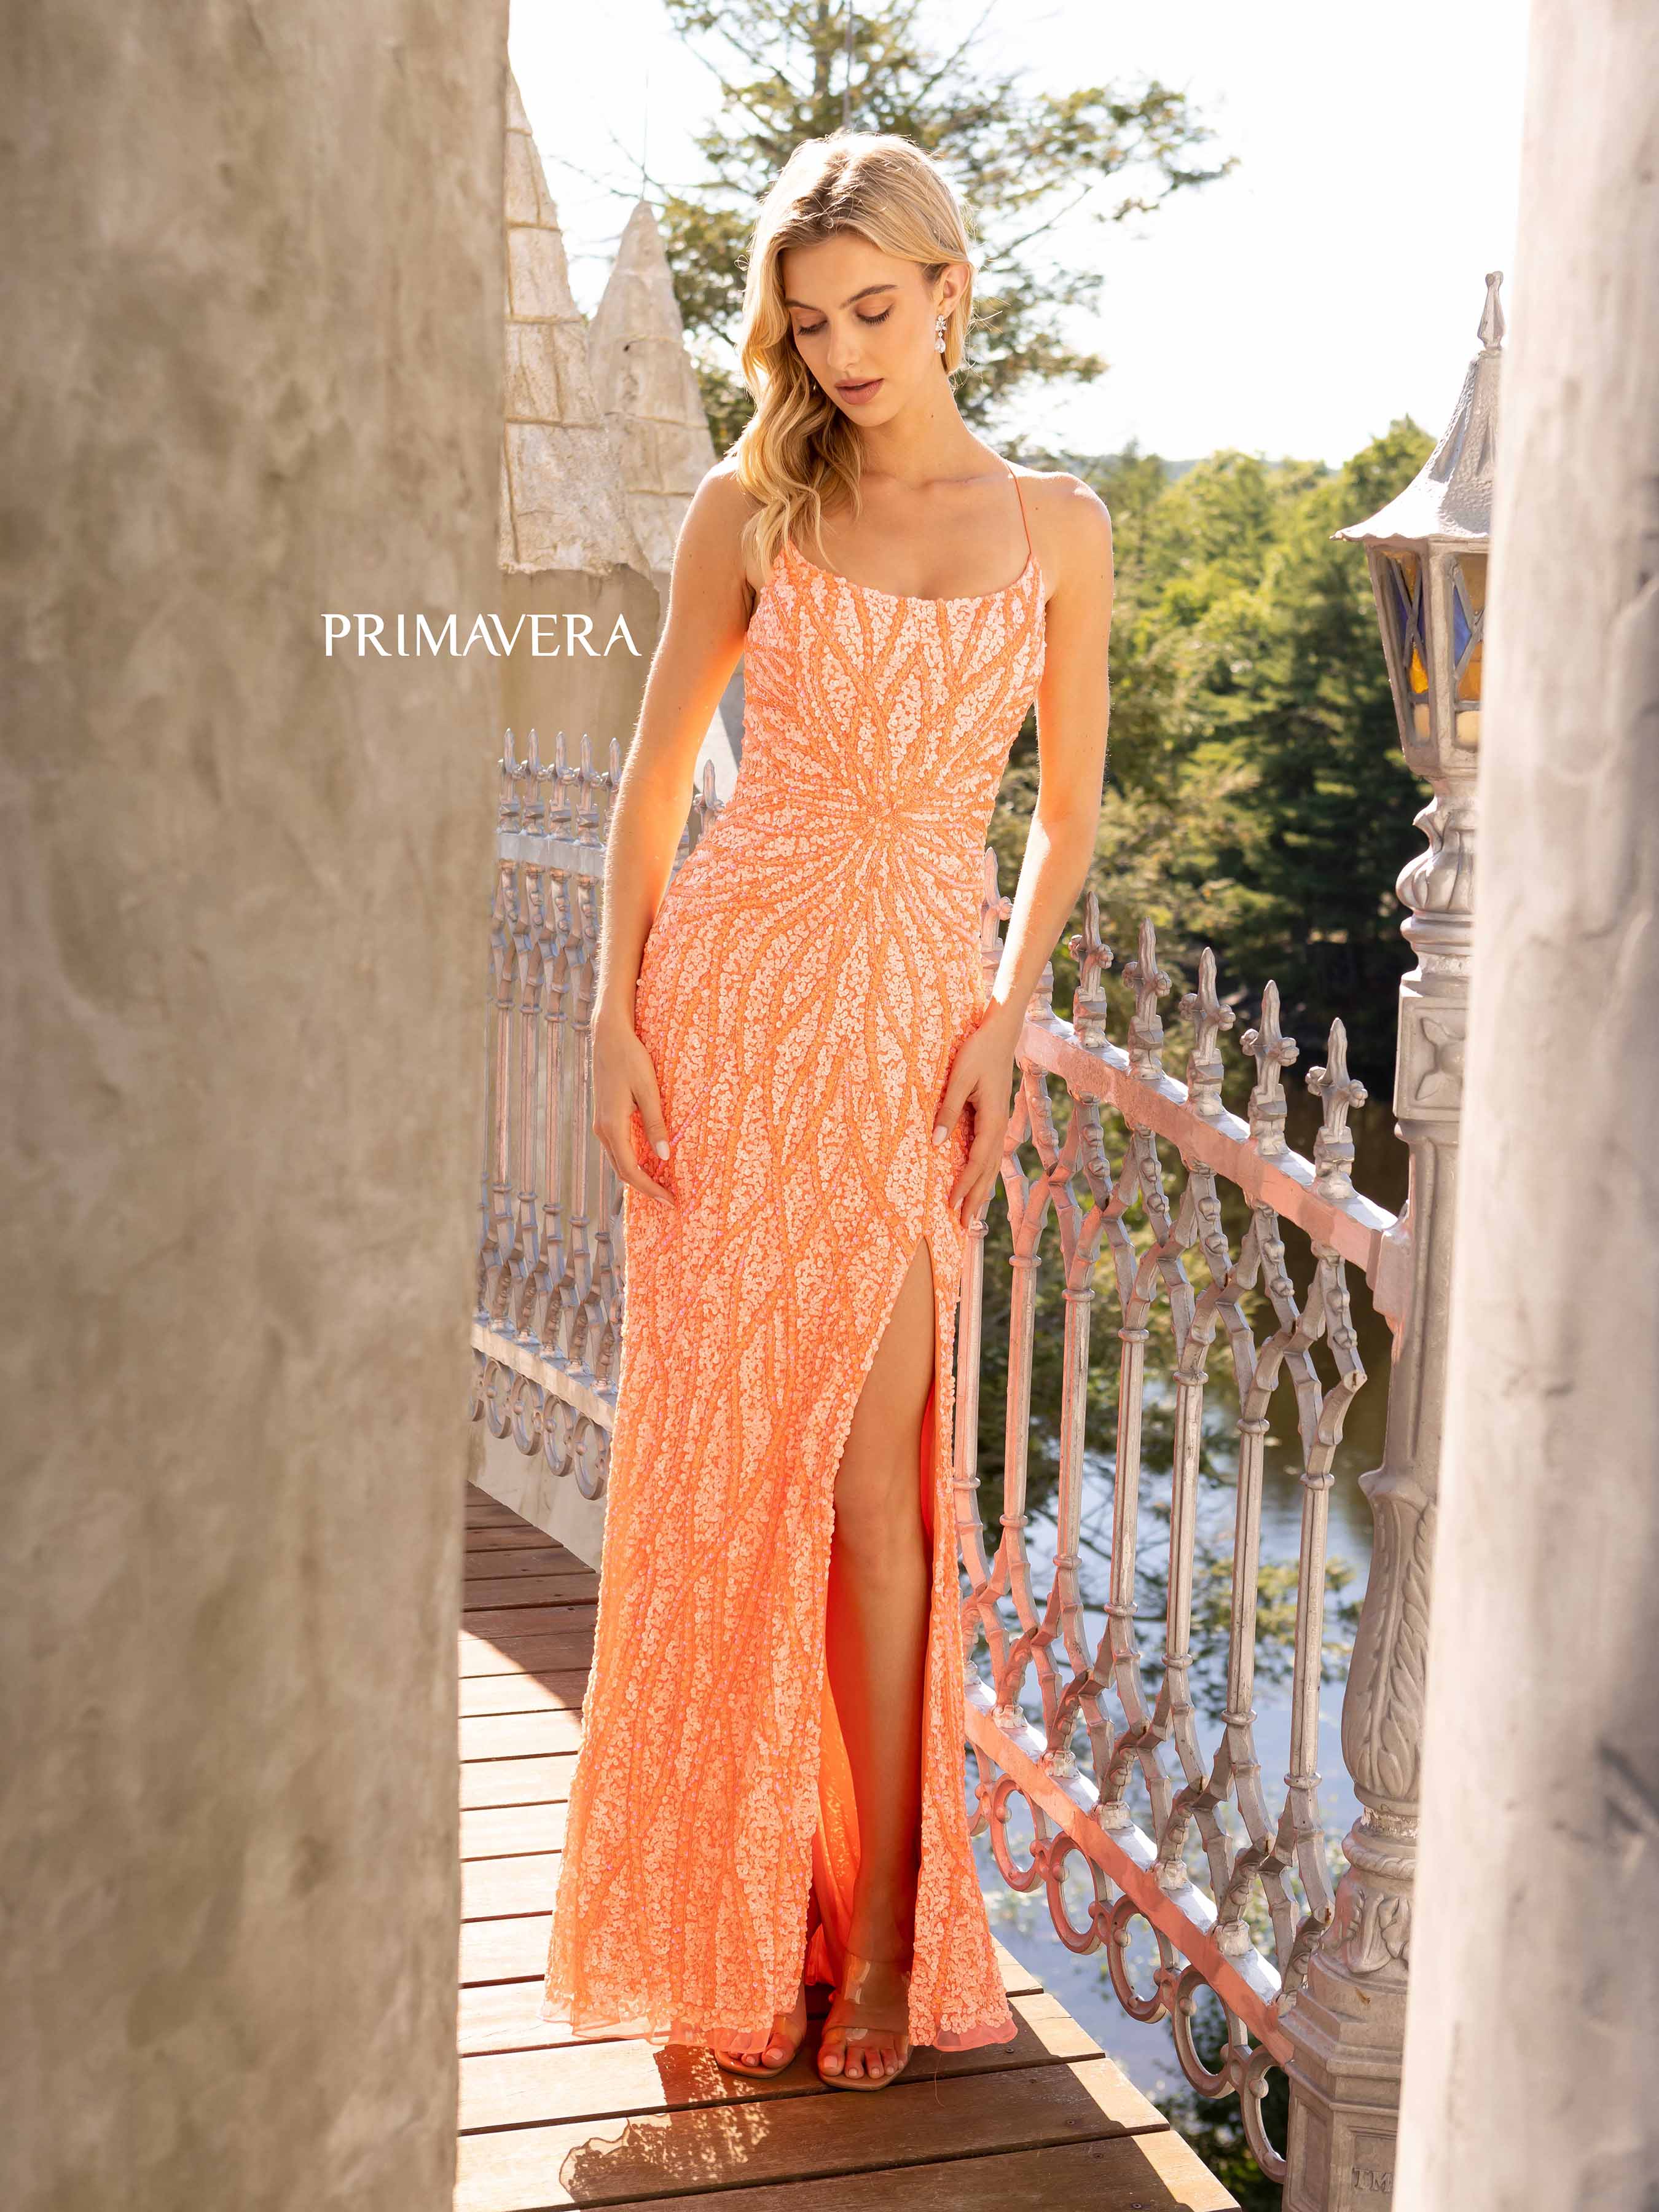 coral prom dress